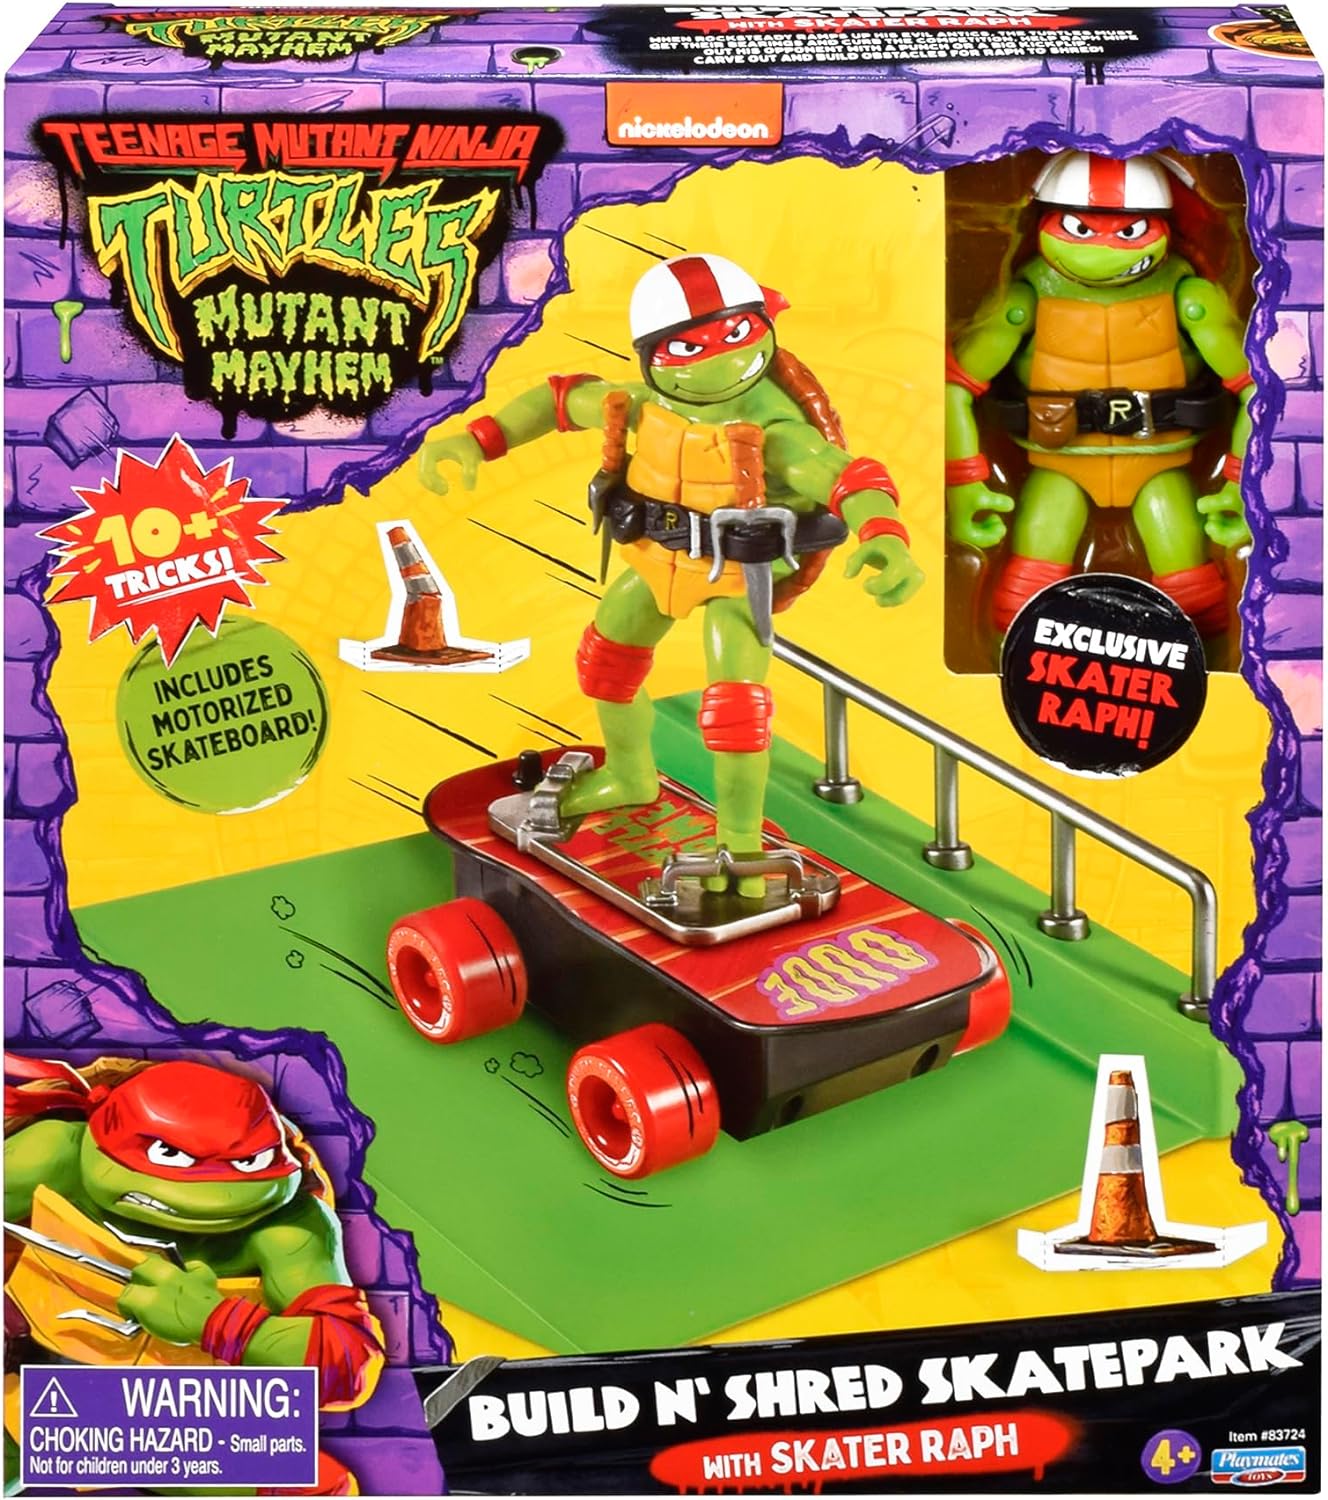 Teenage Mutant Ninja Turtles: Mutant Mayhem Raphael on a Skateboard with Accessories by Playmates Toys - Amazon Exclusive